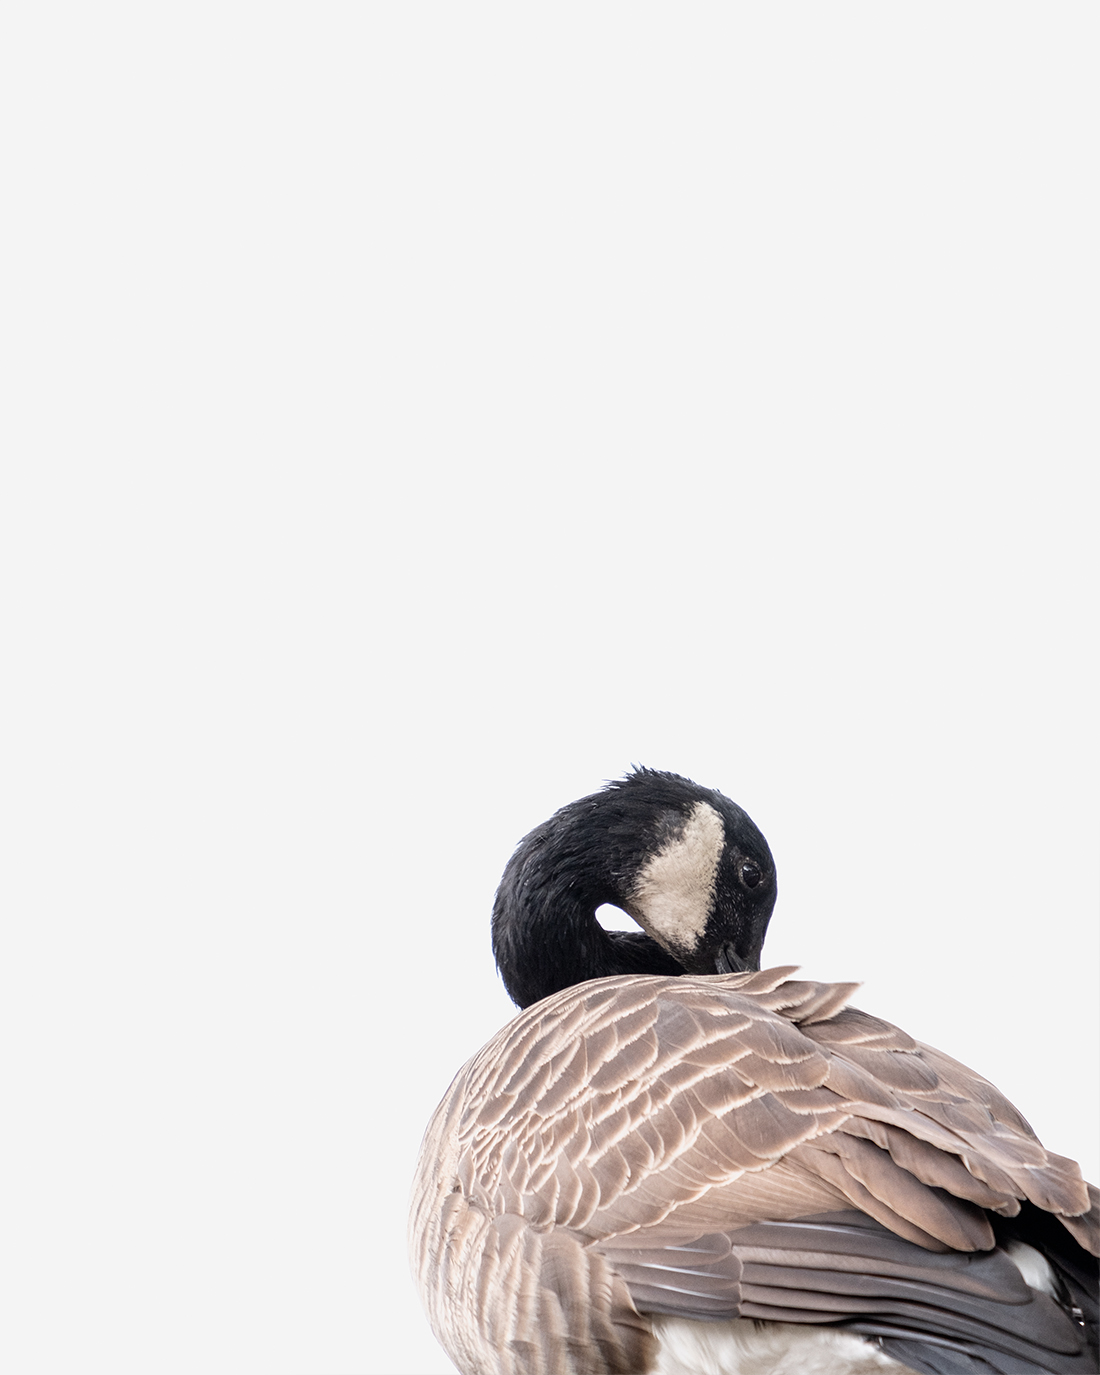 DSCF2939-new edit-birds london-canada goose-st jameses park-ceciliejystad